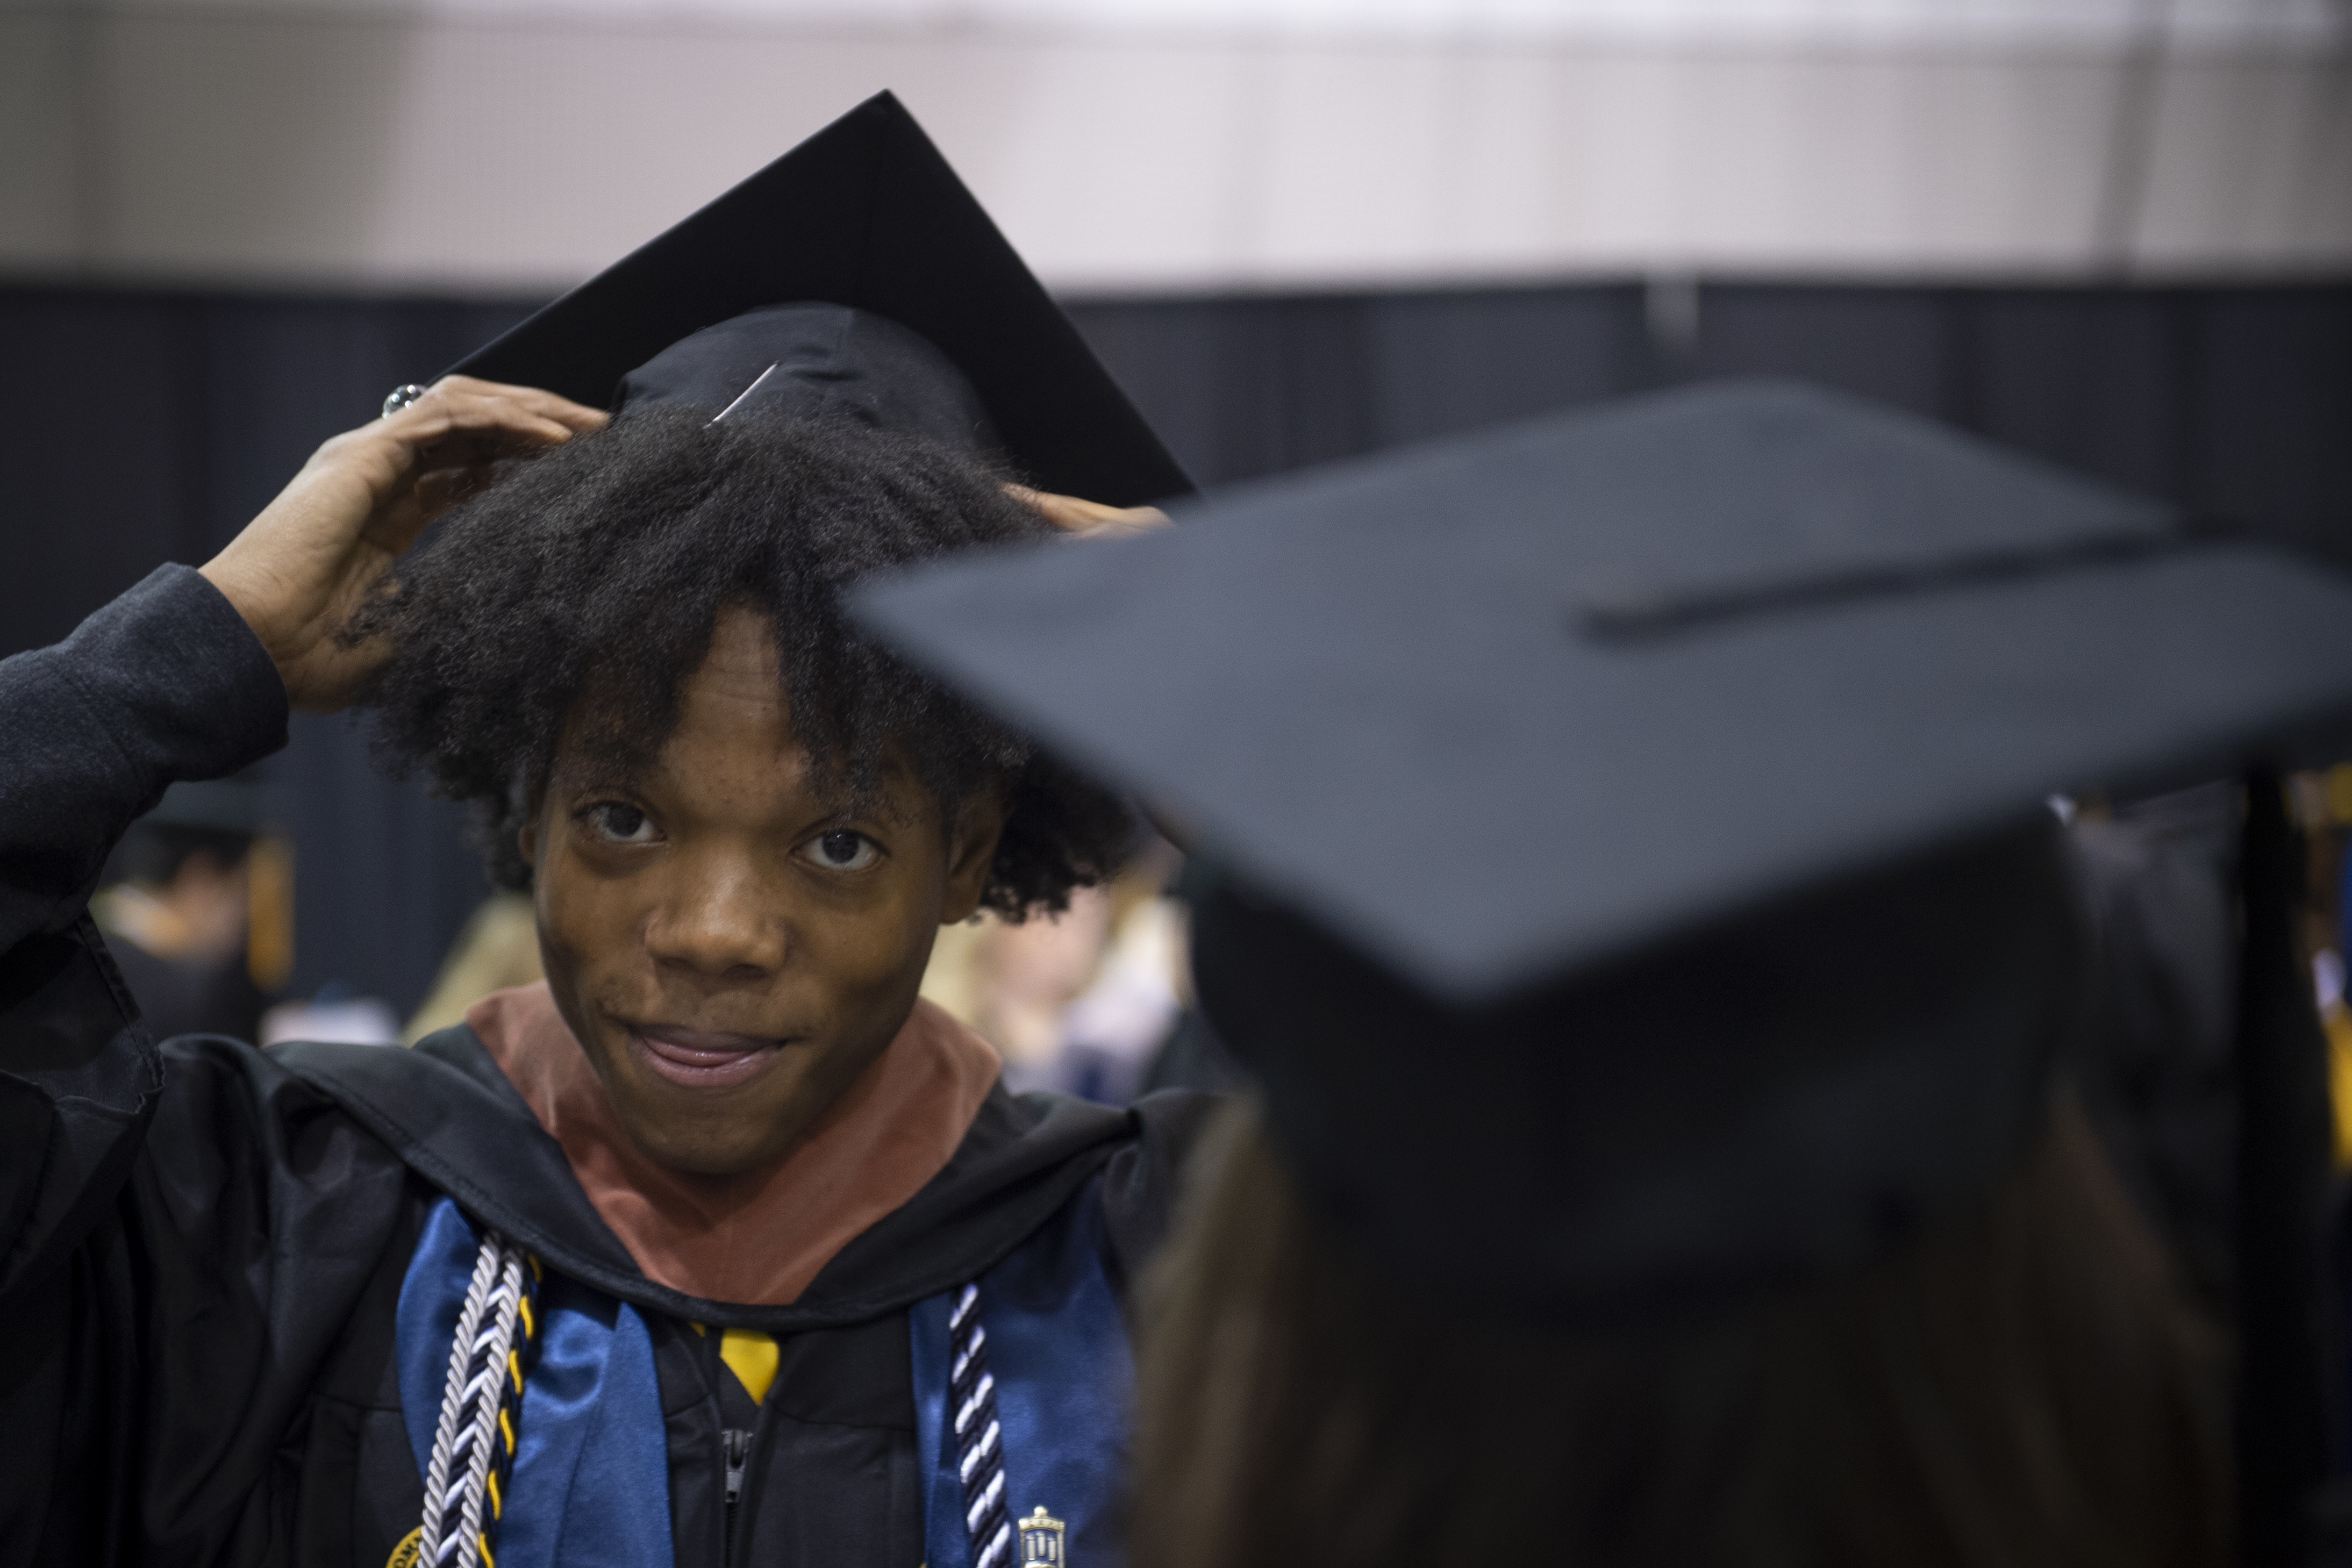 A student straightens his cap at graduation